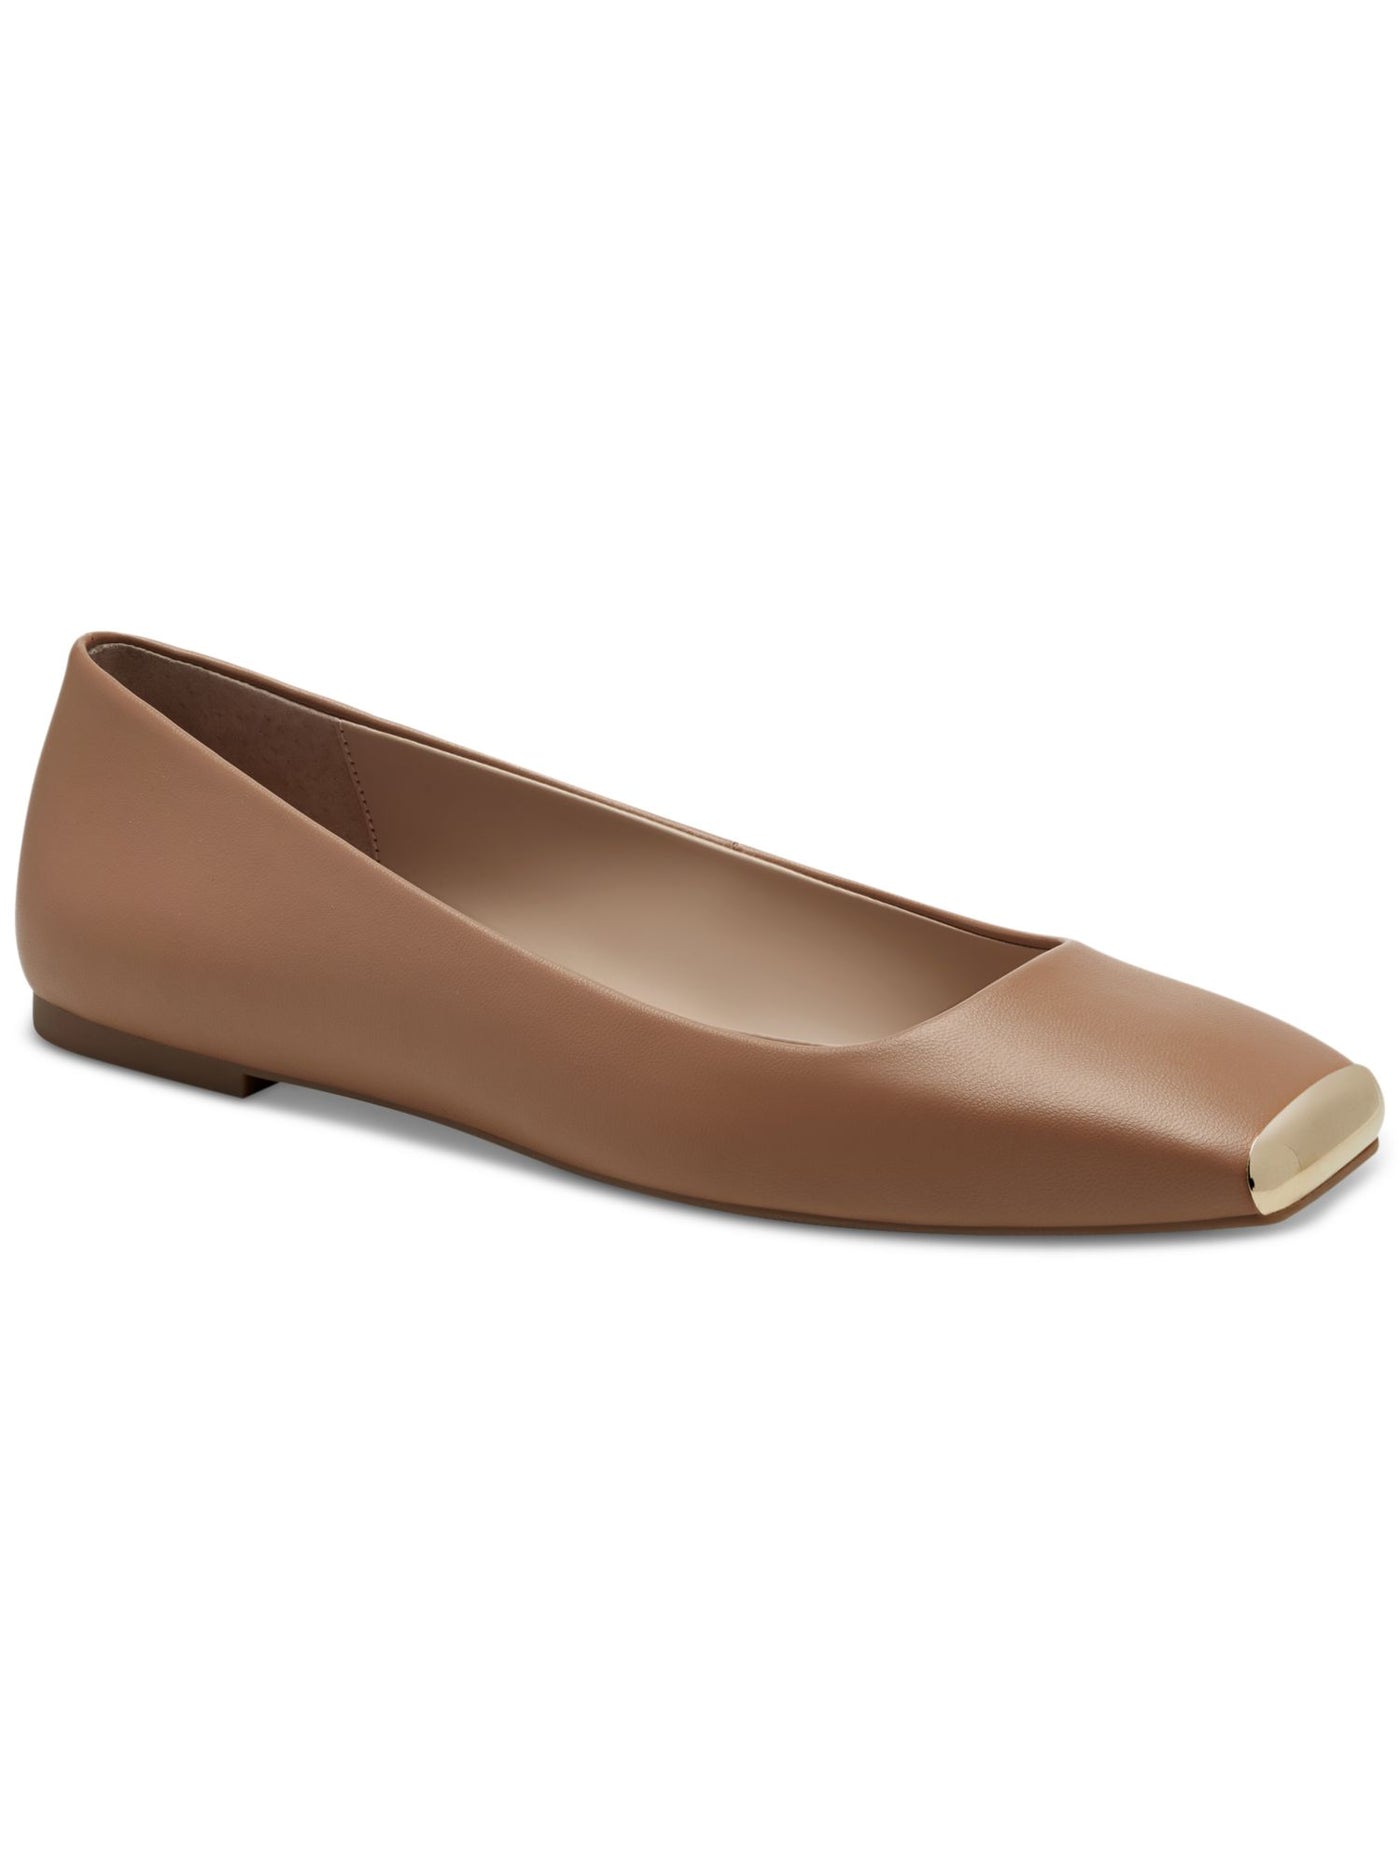 ALFANI Womens Brown Padded Metallic Neptoon Square Toe Block Heel Slip On Flats Shoes 5.5 M